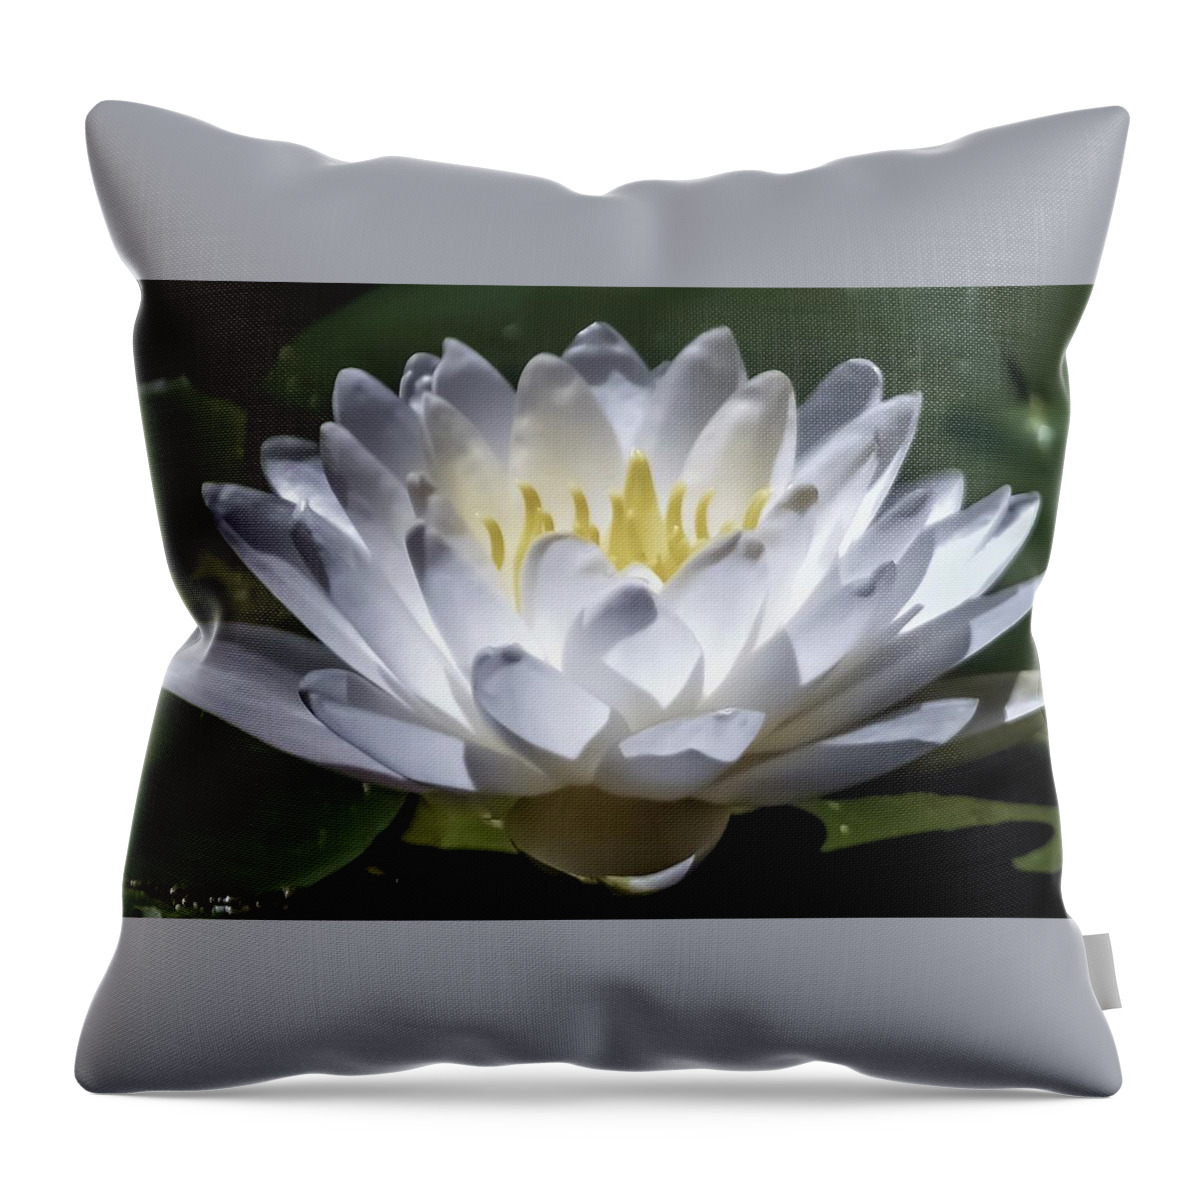 Purity Throw Pillow featuring the photograph The White Lotus by Christina McGoran